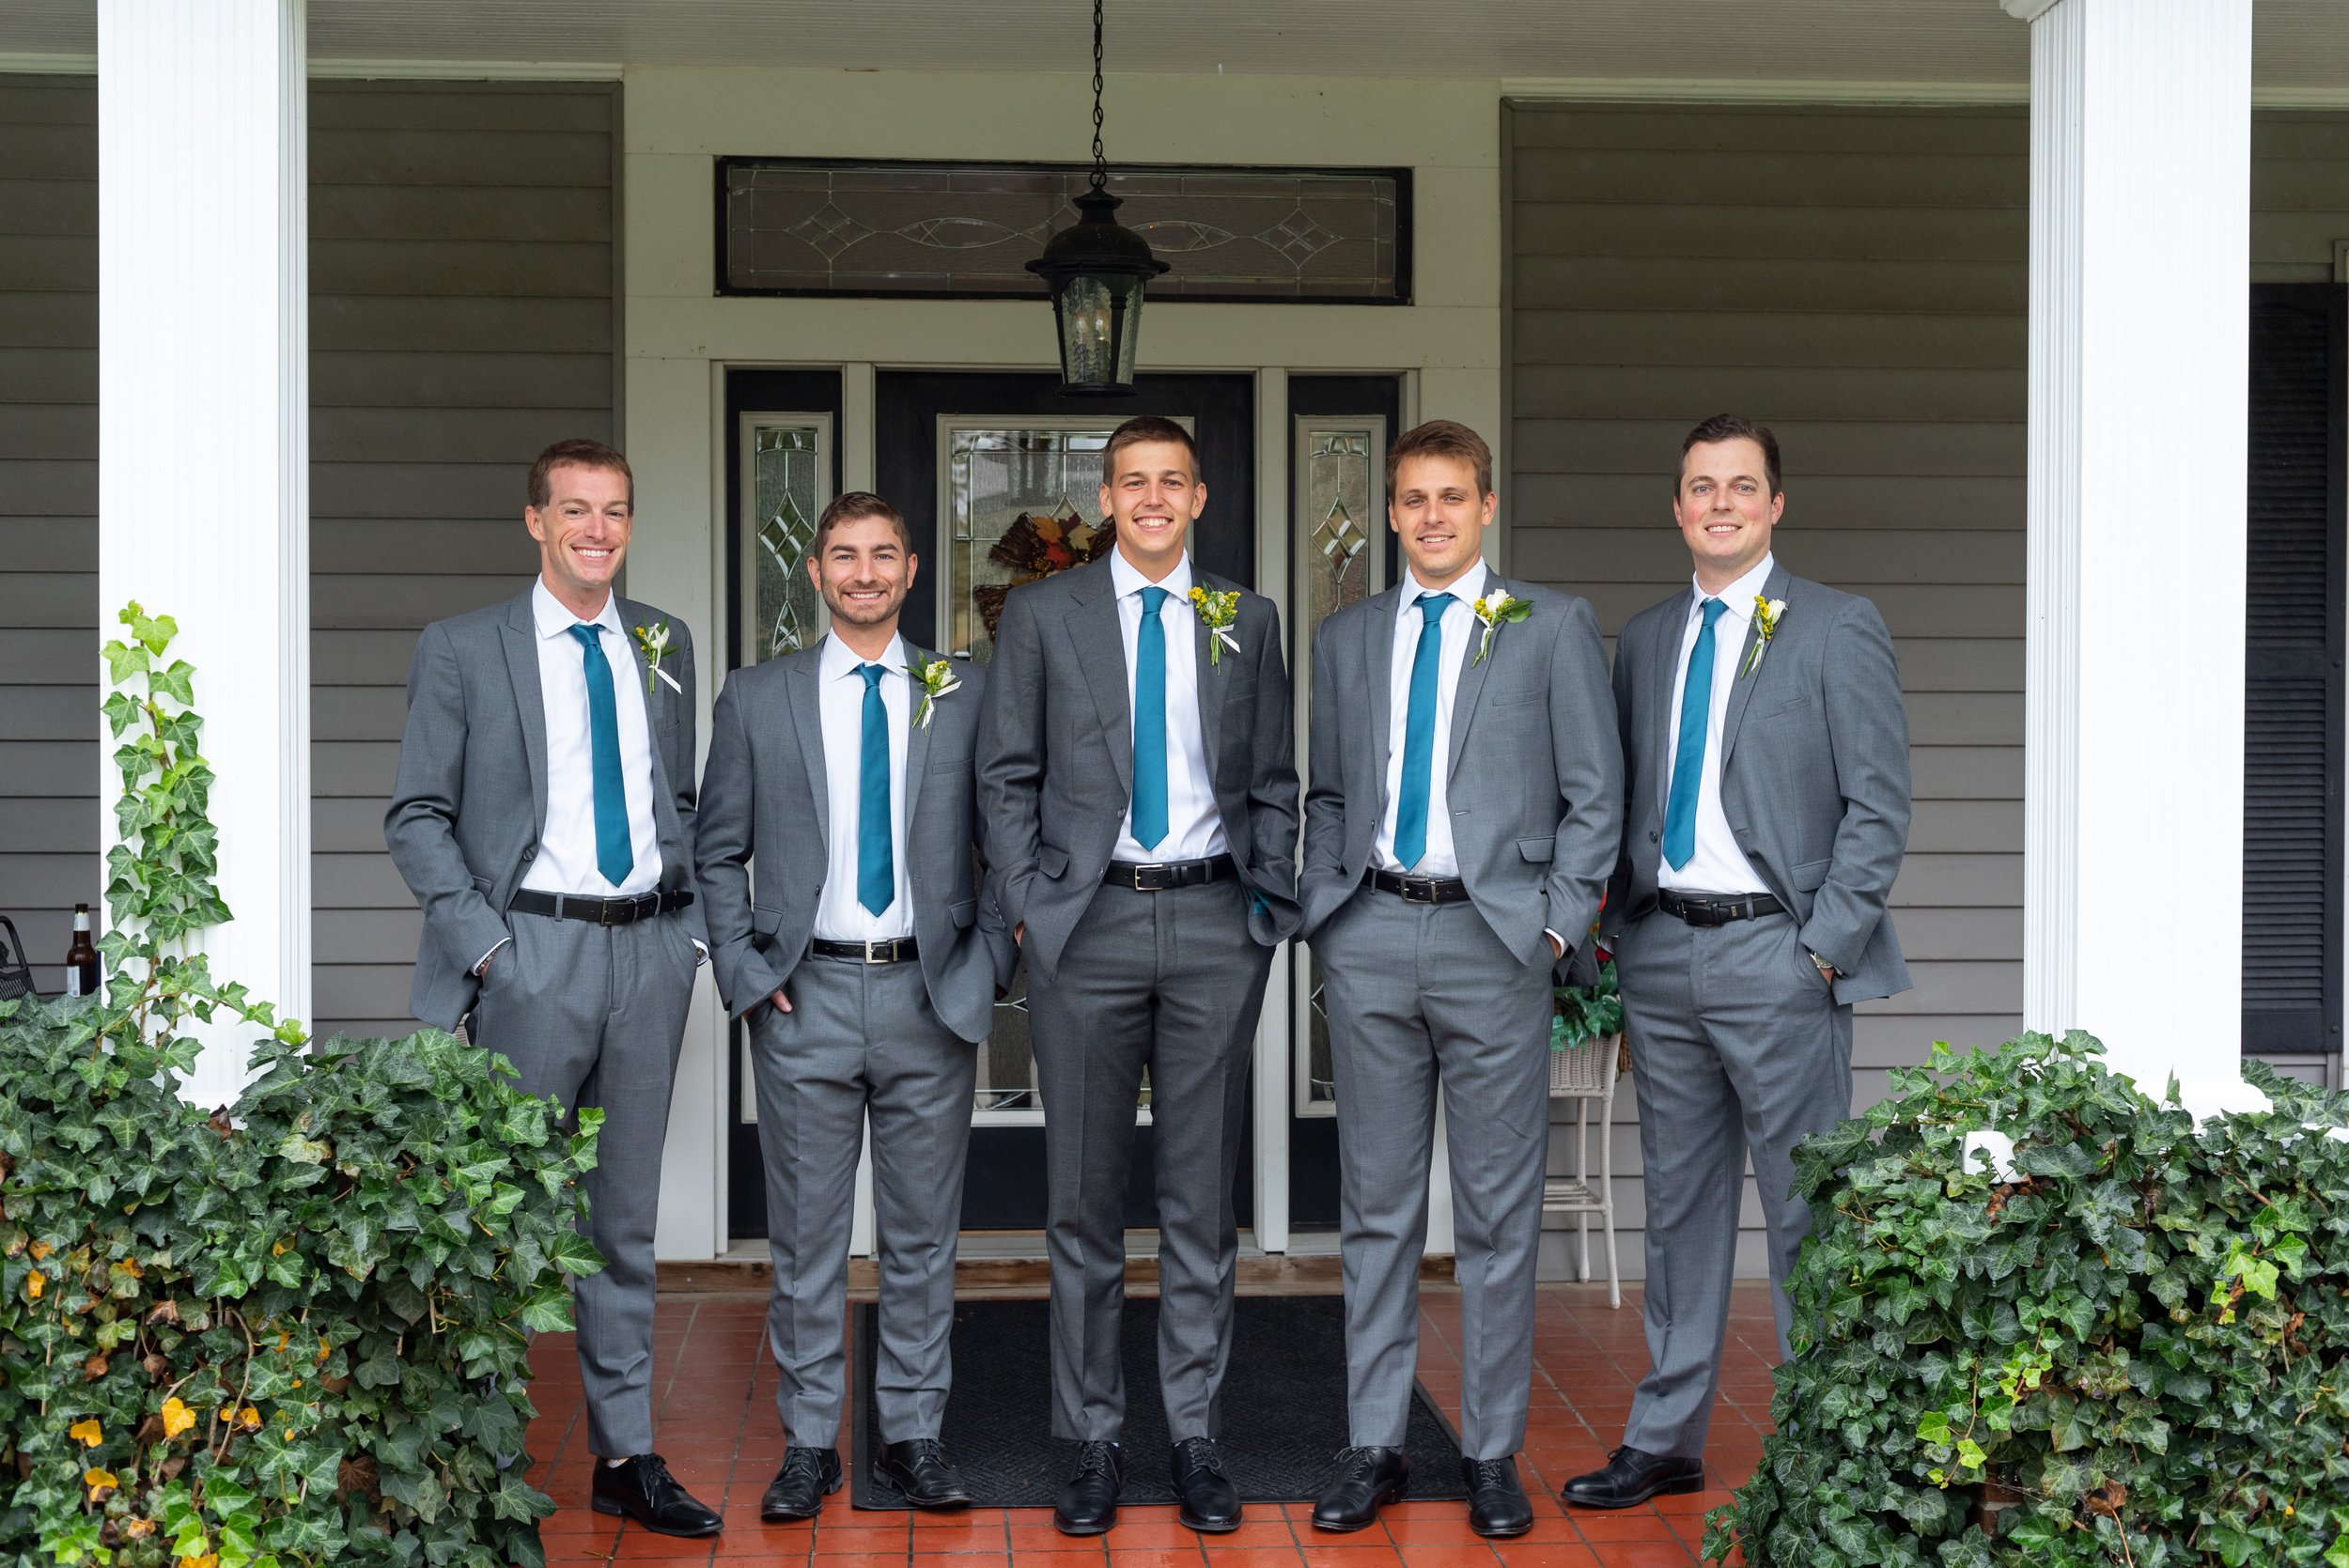 Groom and groomsmen formal photos at Airbnb in Luray Virginia wedding